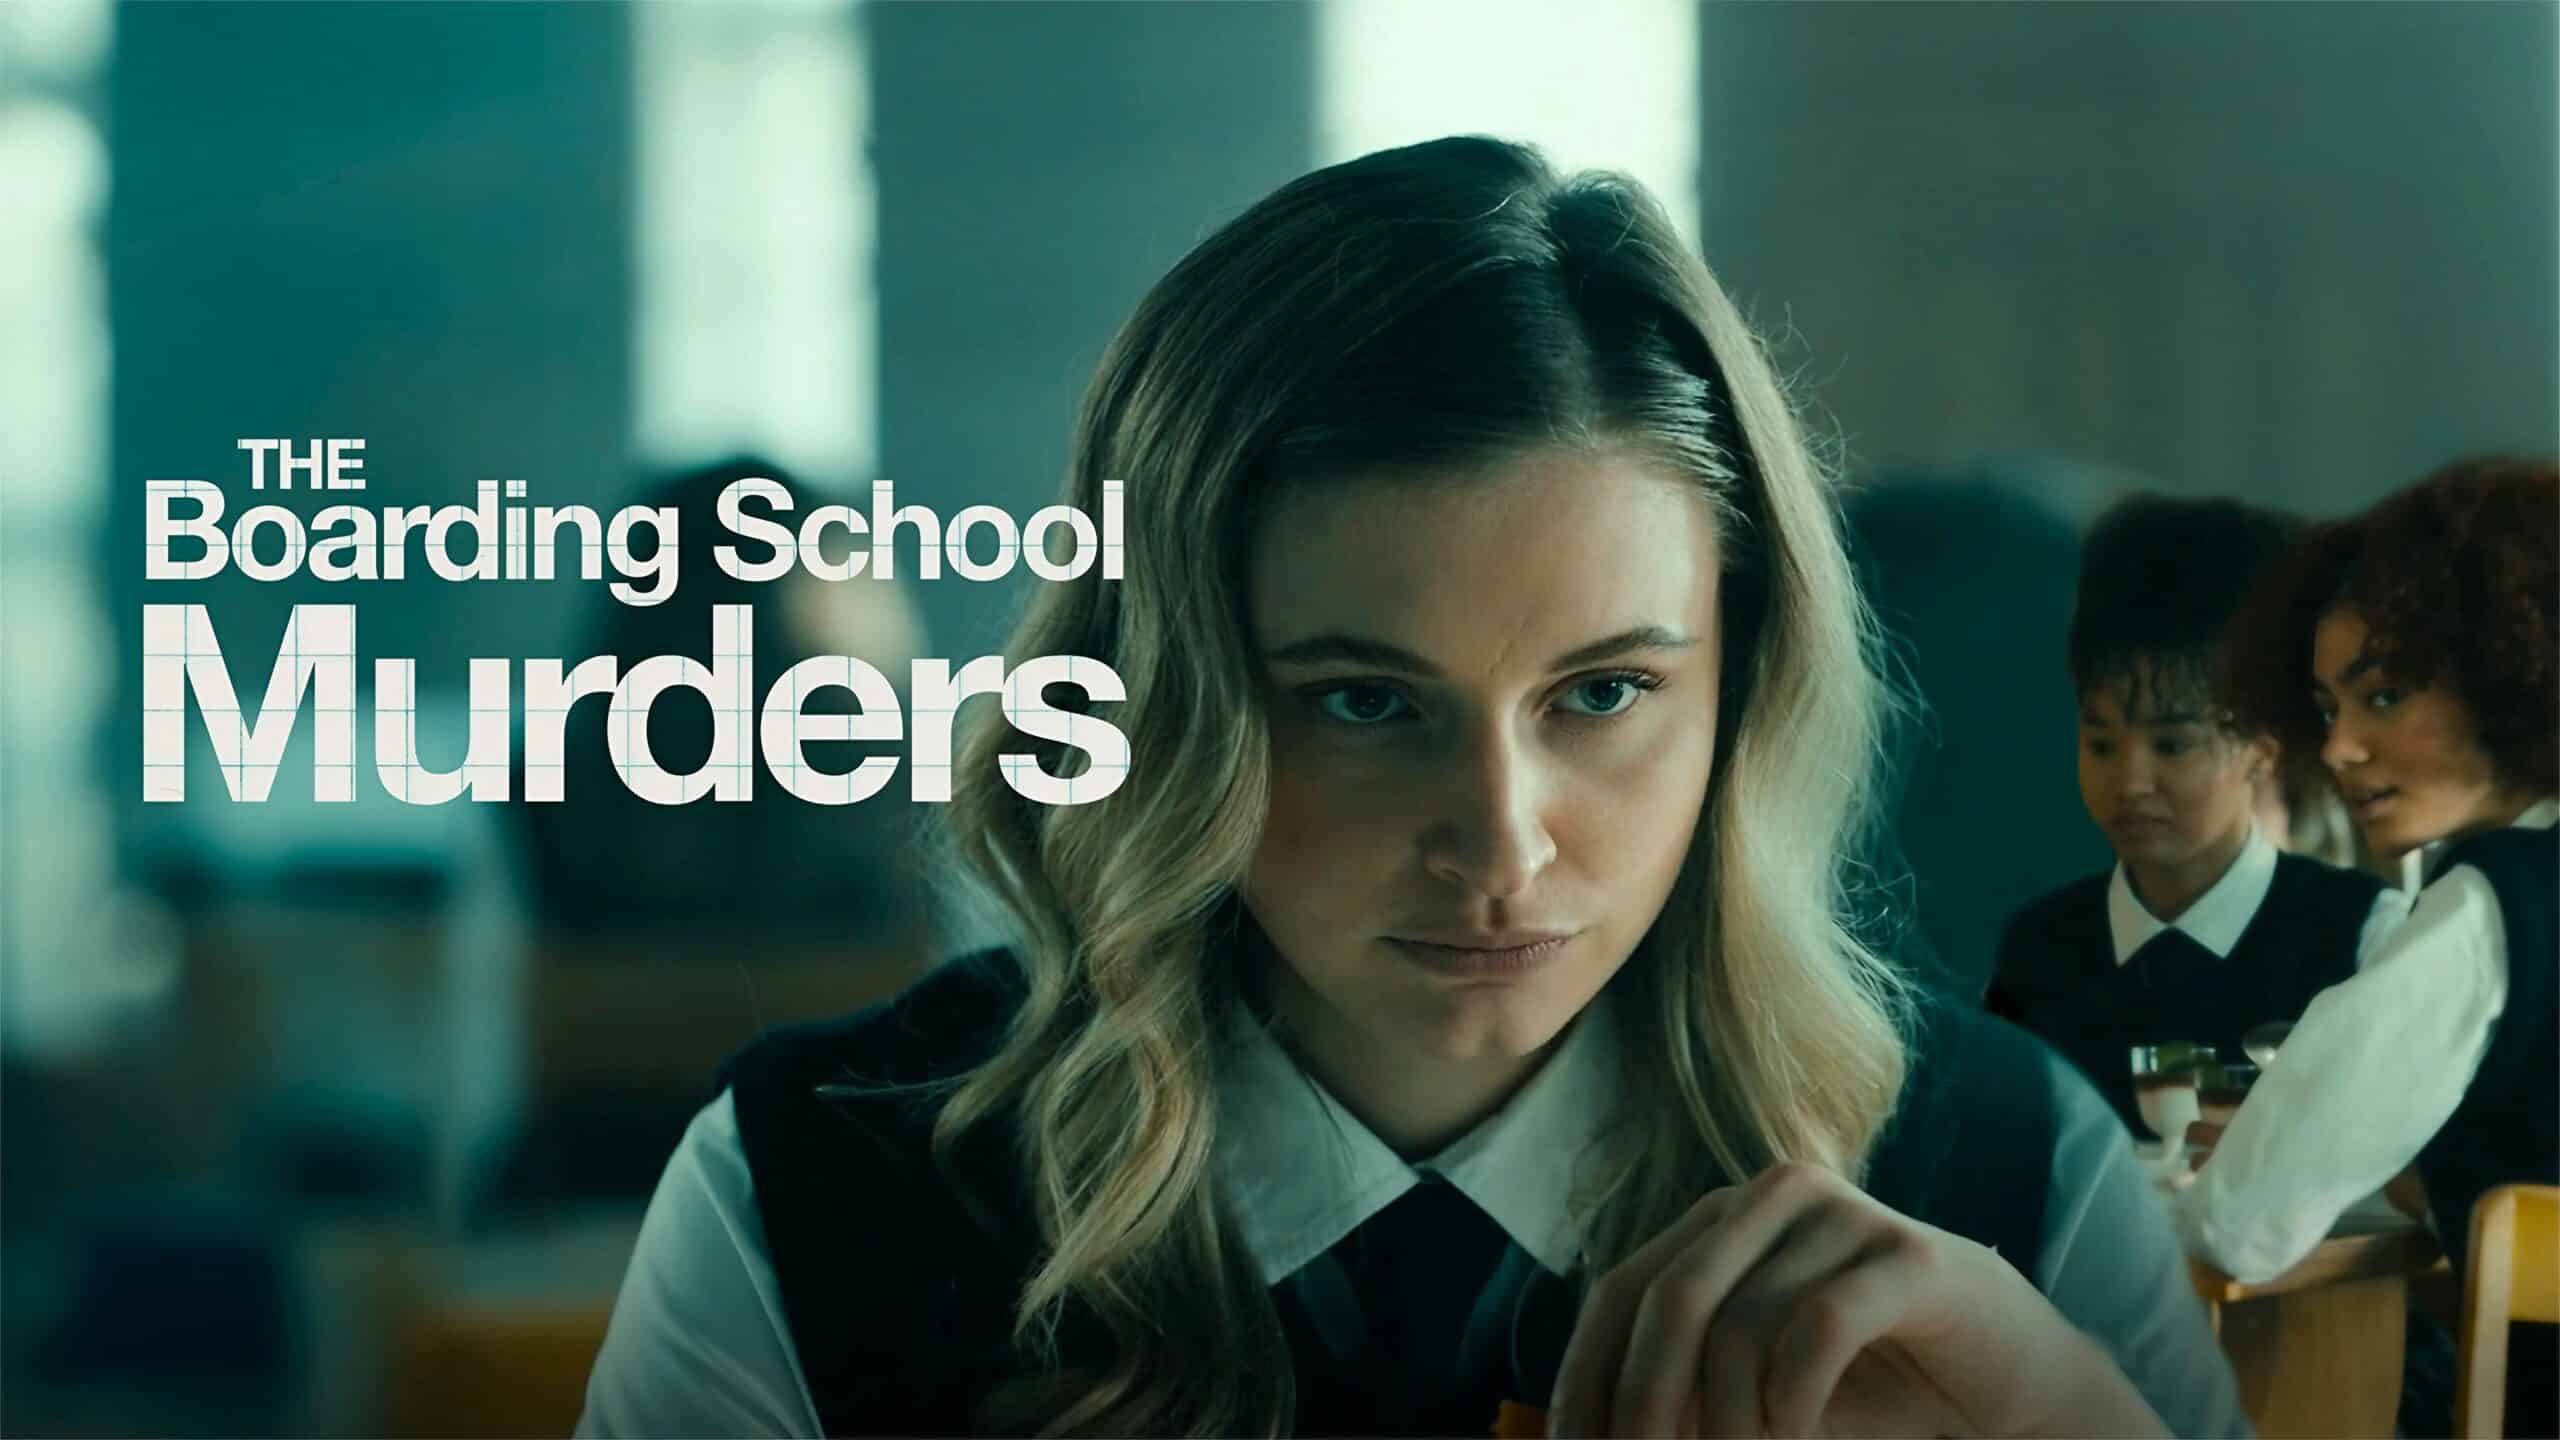 Is Lifetime’s The Boarding School Murders Inspired by a True Story